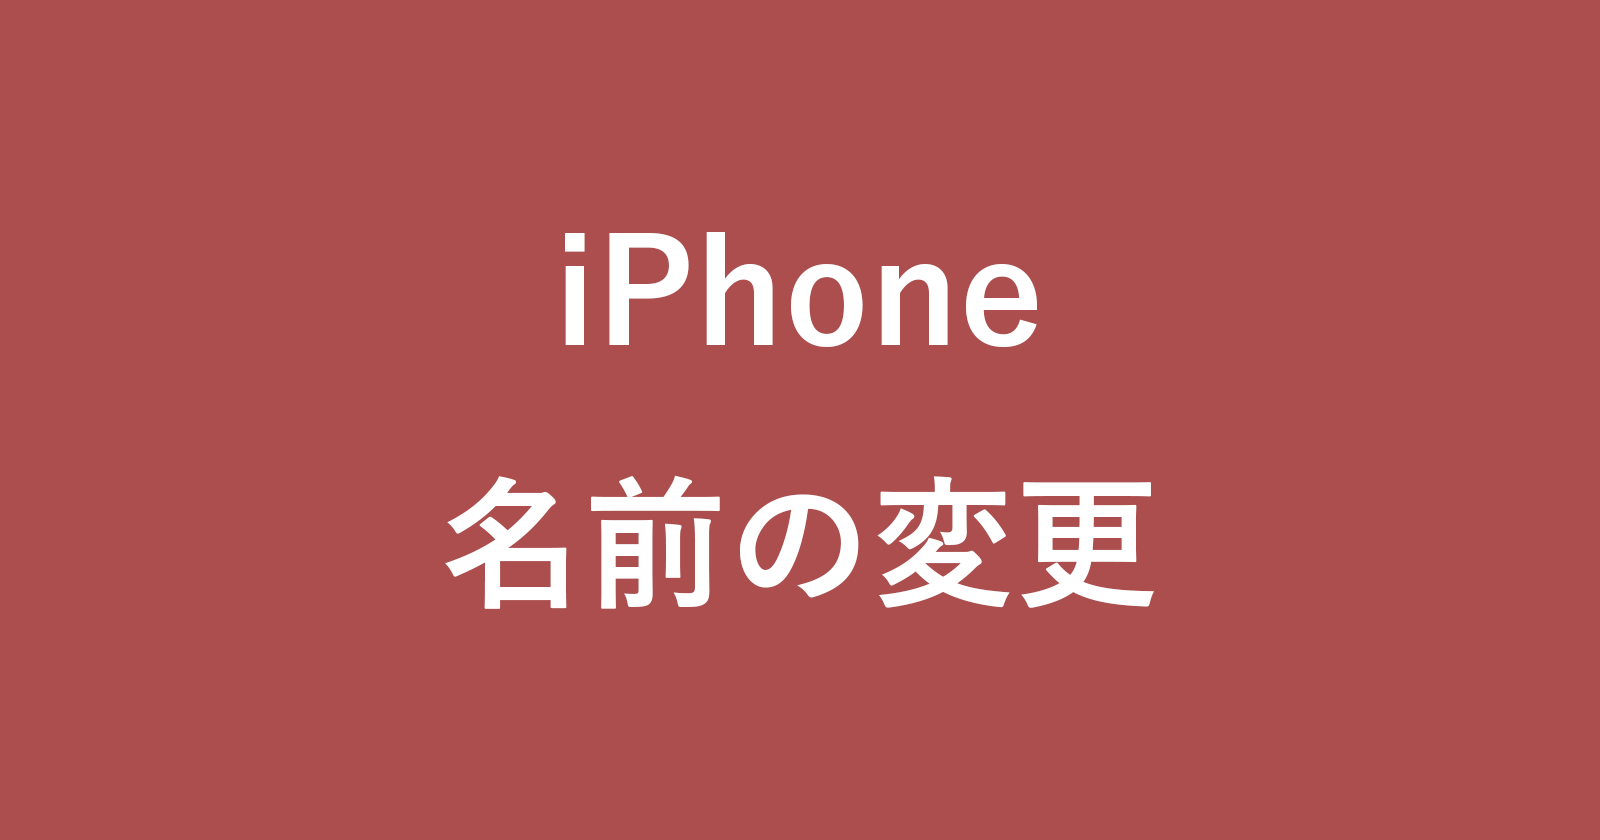 iphone change name